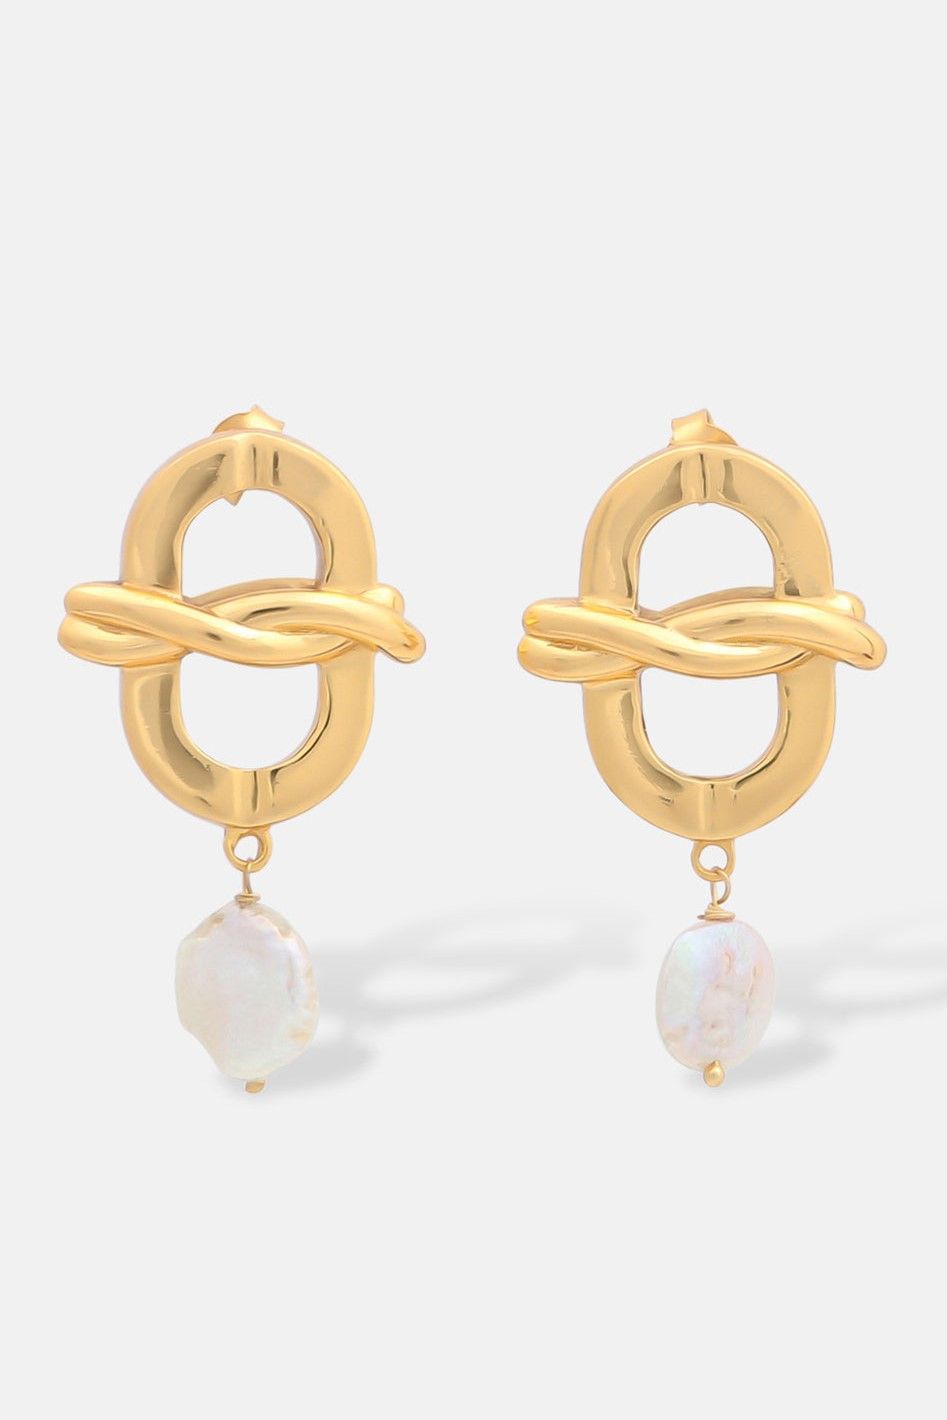 Celestial Pearl Drop Earrings Mamour Paris Jewelry